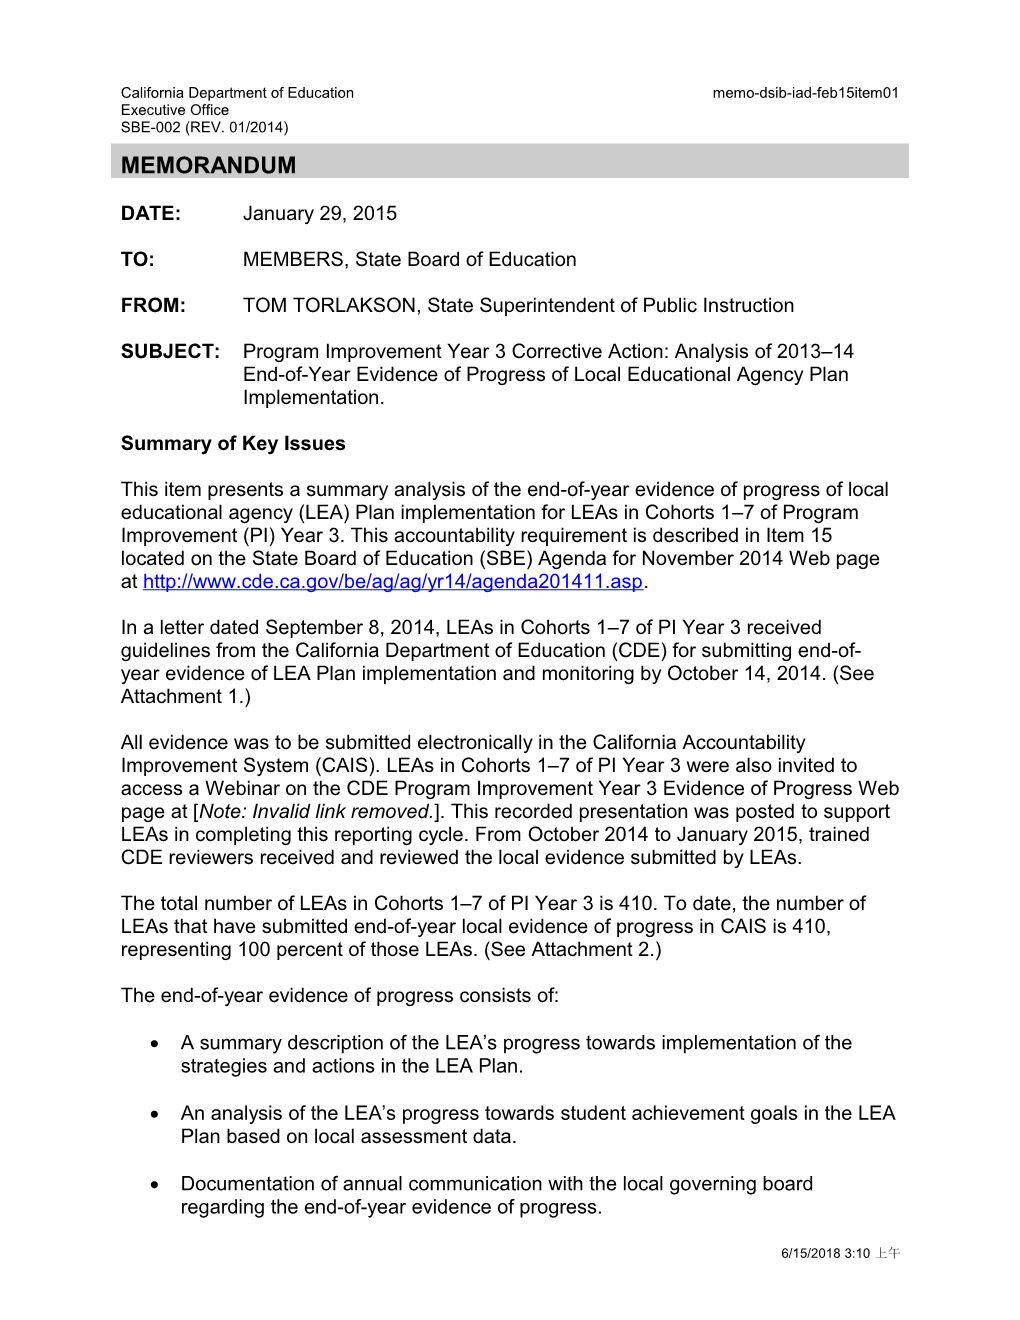 February 2015 DSIB IAD Item 01 - Information Memorandum (CA State Board of Education)